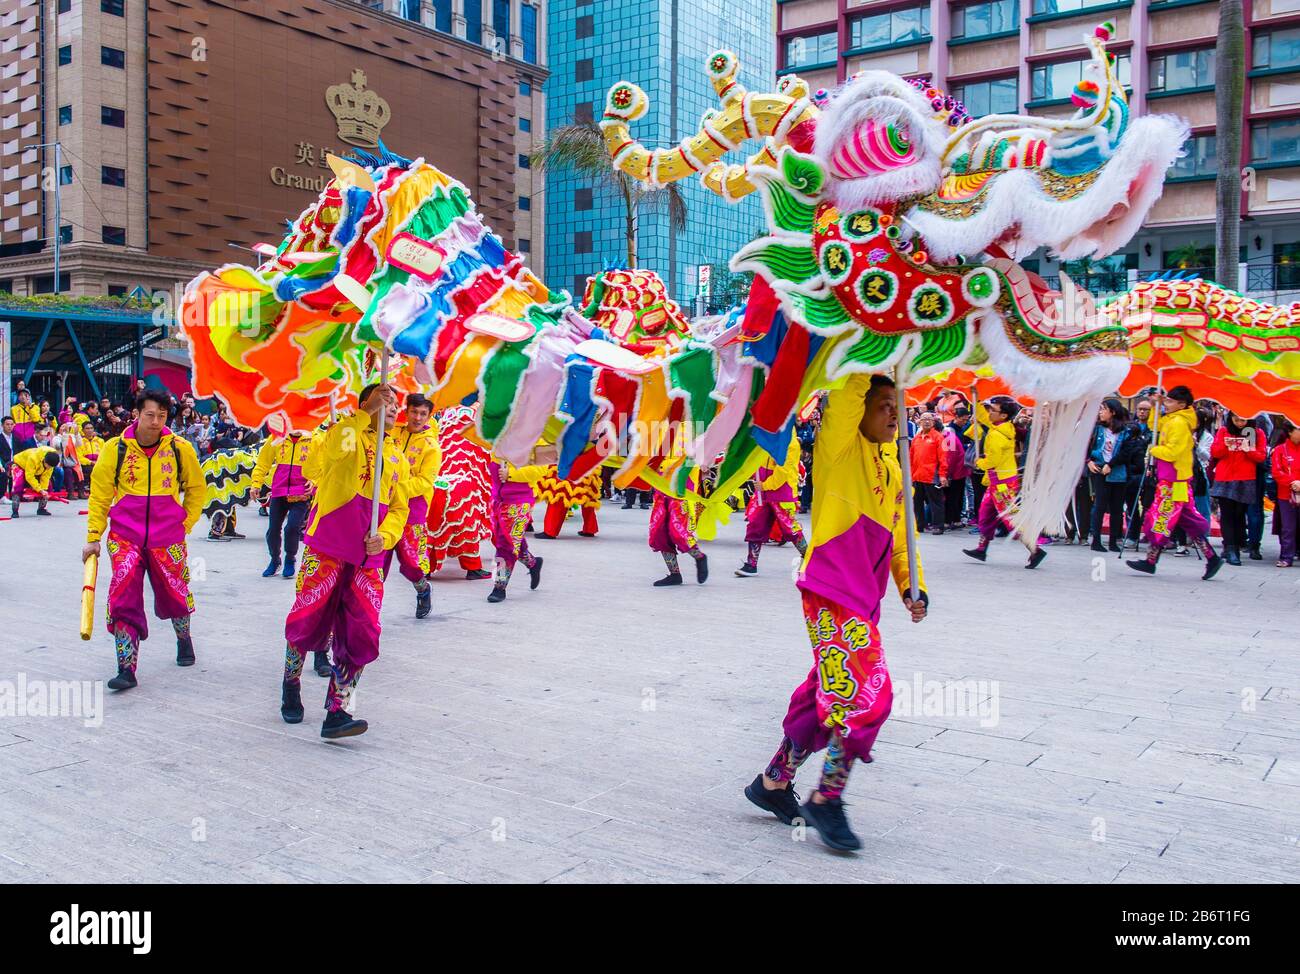 Dancers perform a Dragon dance during the Macau International Dragon and Lion Dance Day event at Praca da Amizade in Macau Stock Photo